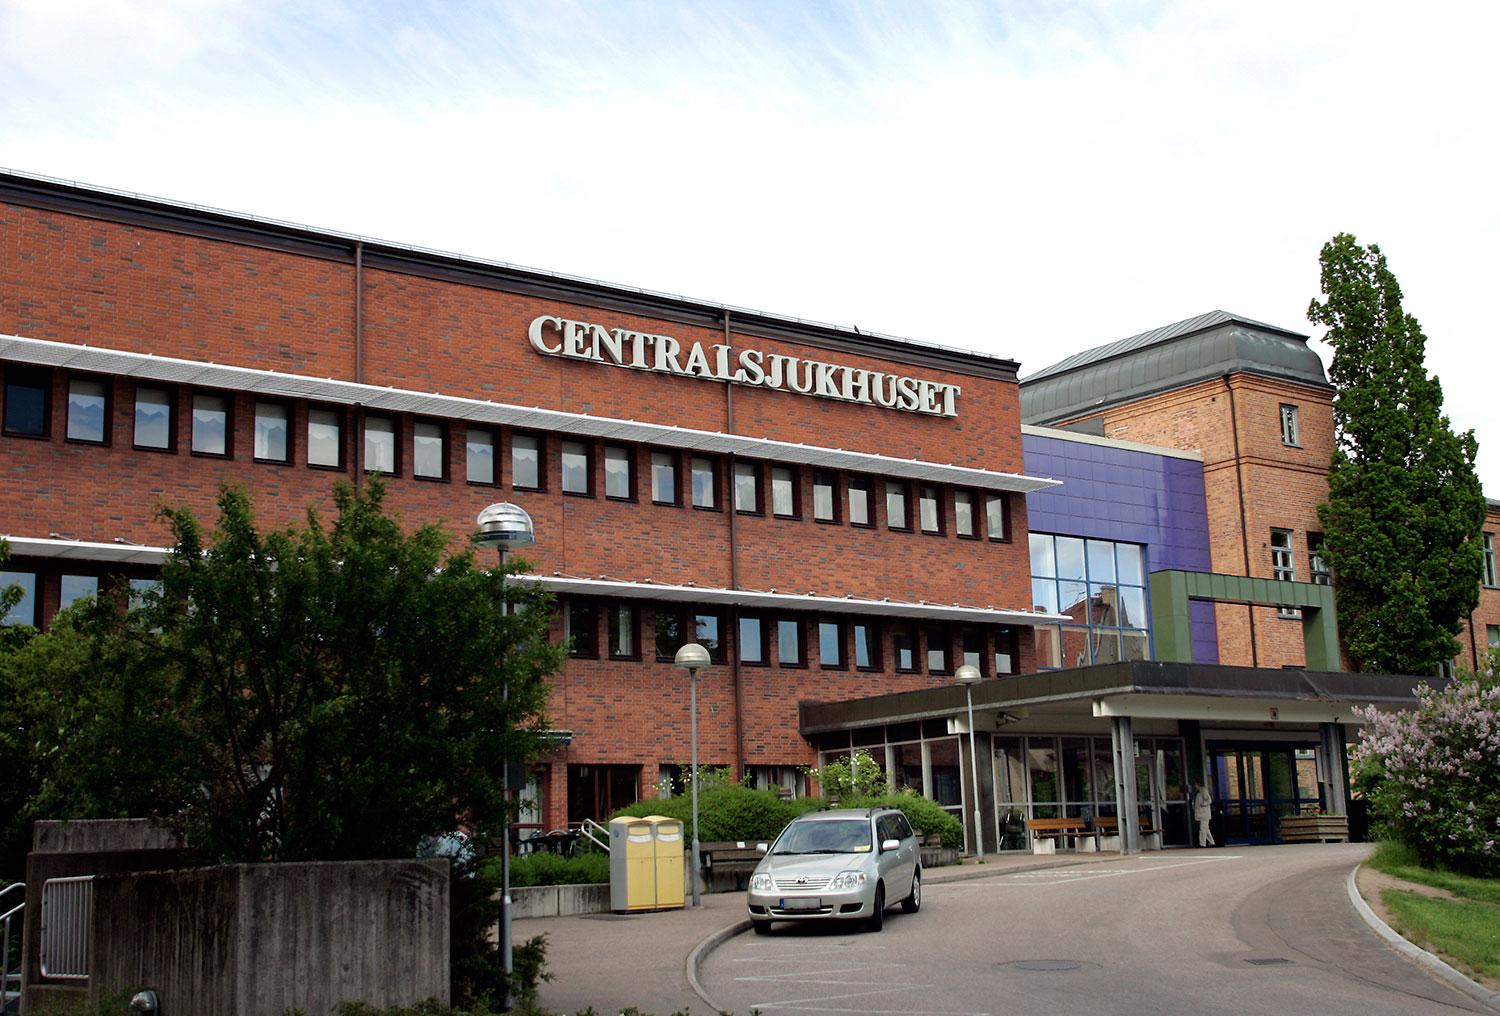 Centralsjukhuset i Karlstad.